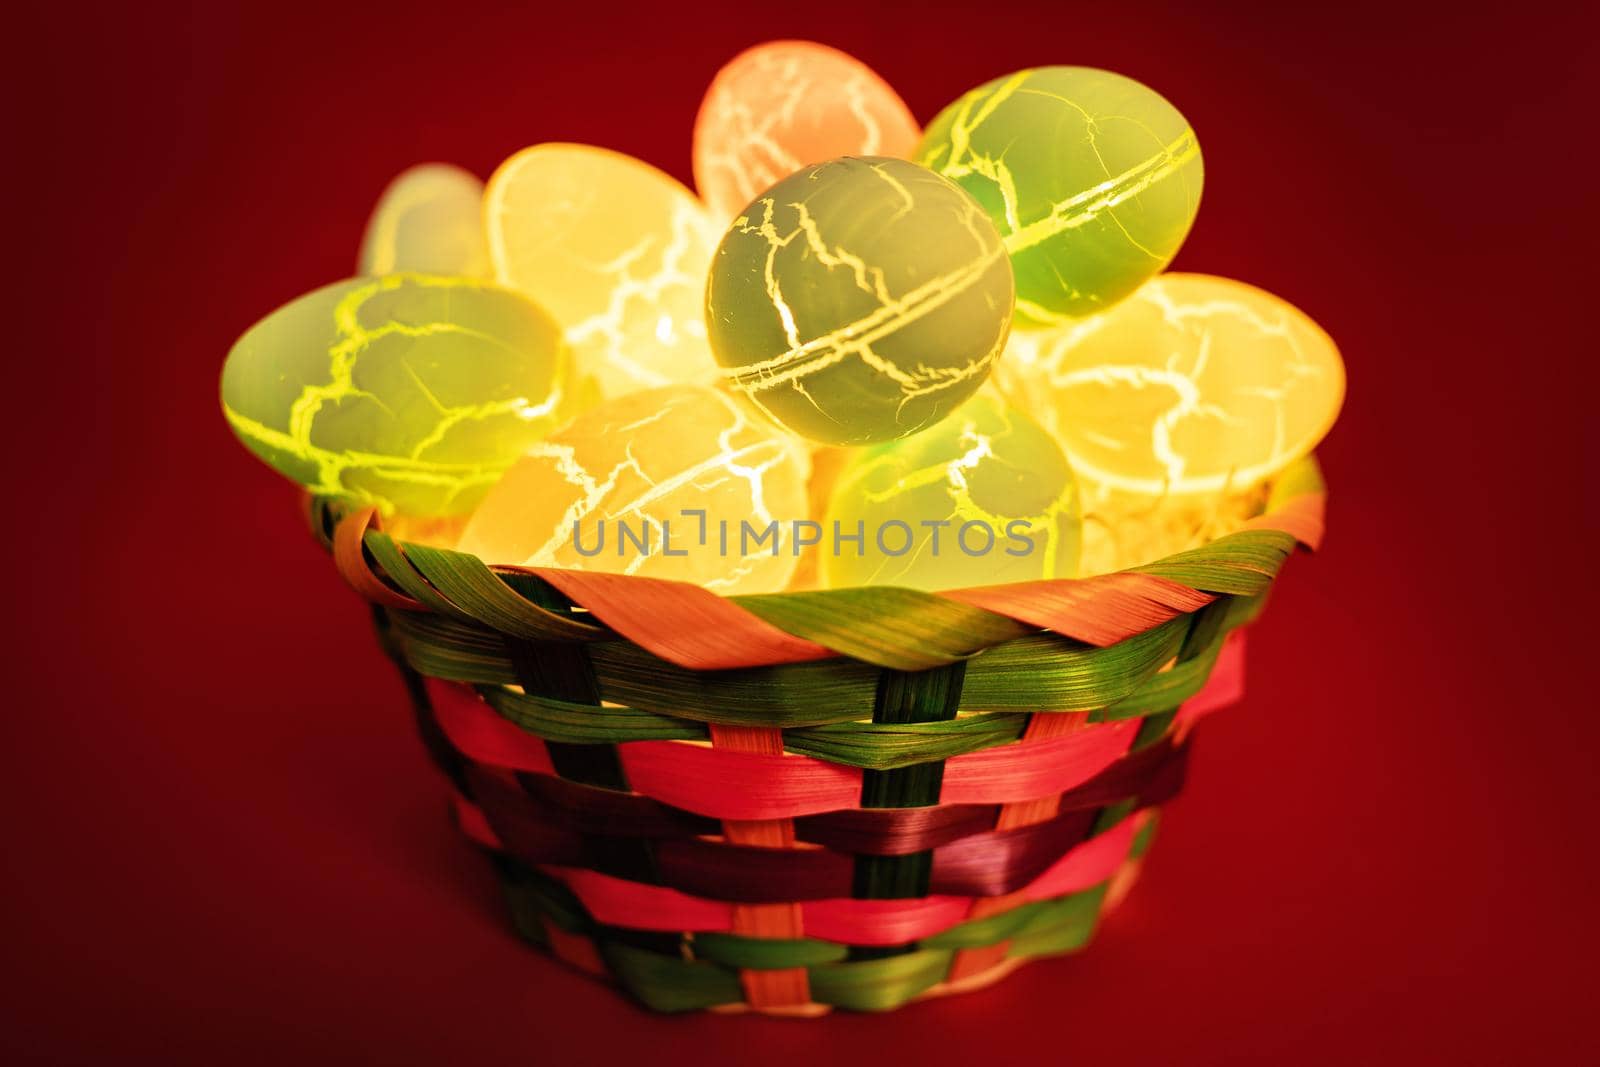 Easter egg shaped lights in a colorful basket by Mendelex